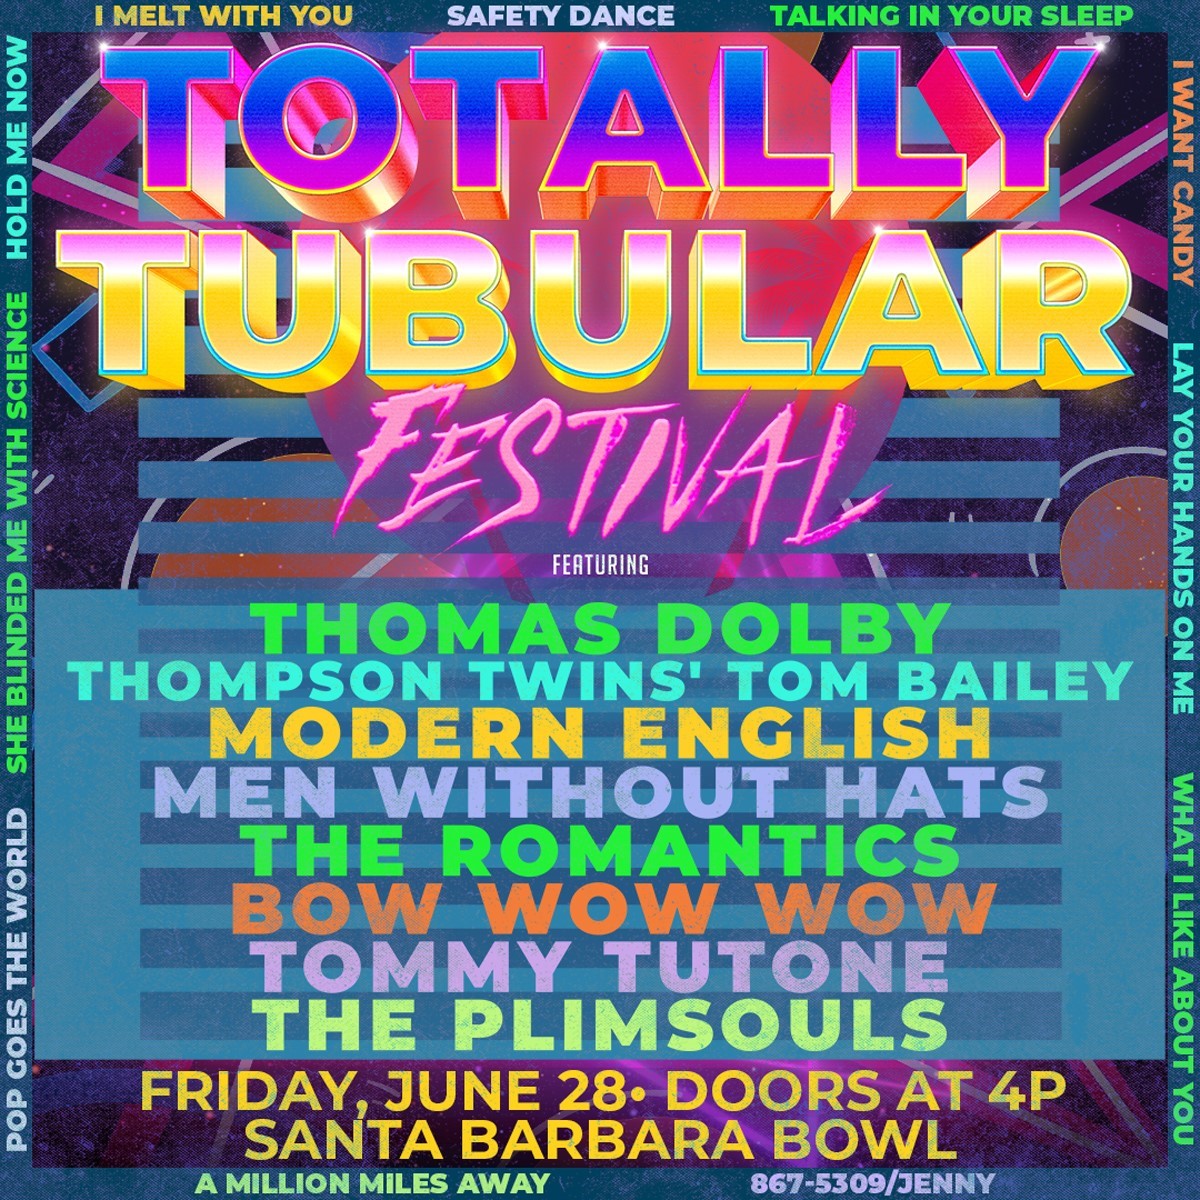 Totally Tubular Fest Contest Rules